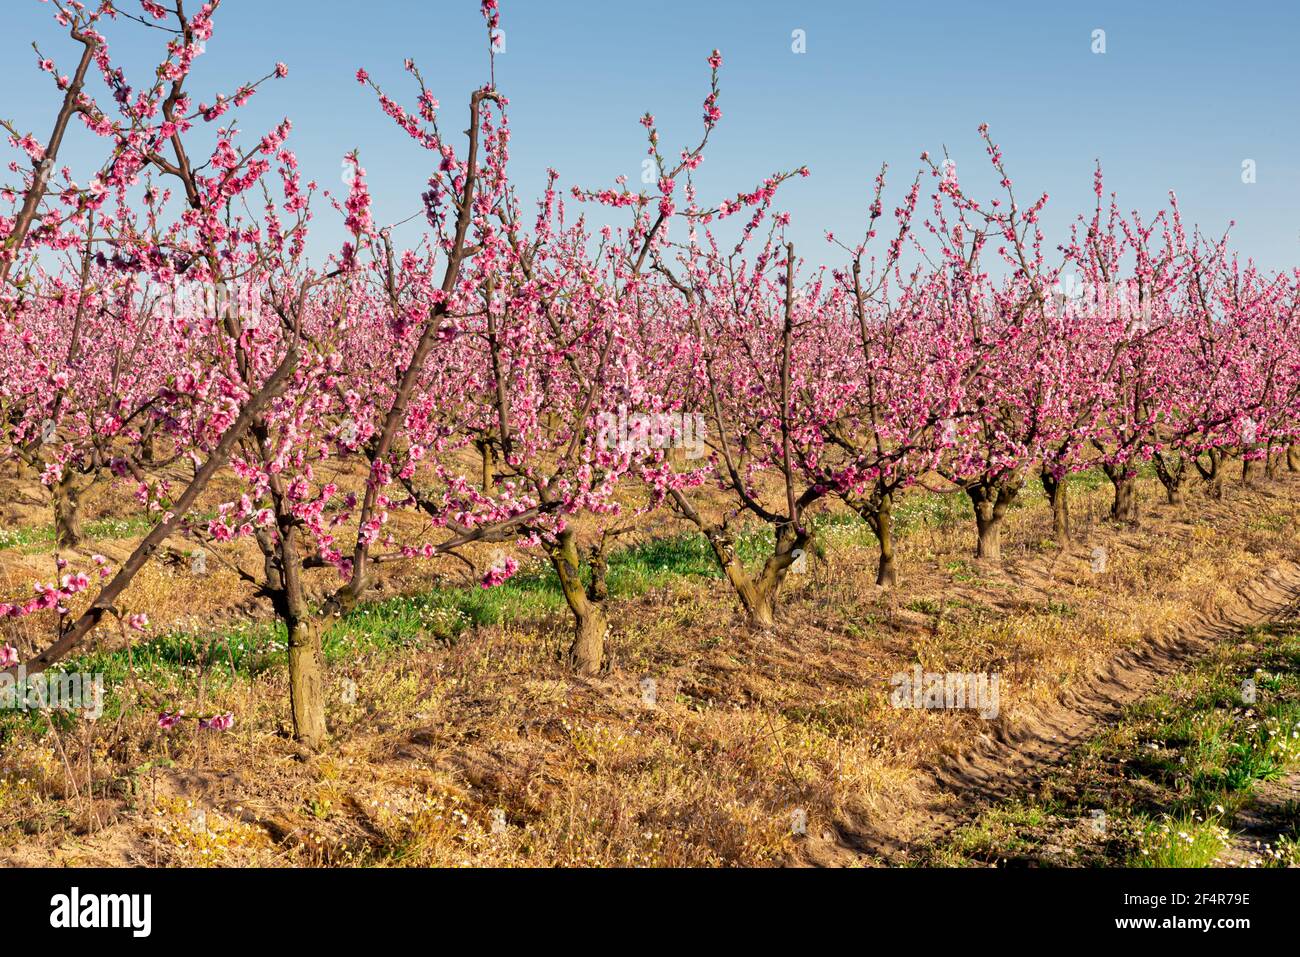 https://c8.alamy.com/comp/2F4R79E/peach-blossom-at-dusk-in-plantation-grown-in-spain-prunus-persica-rosaceae-2F4R79E.jpg